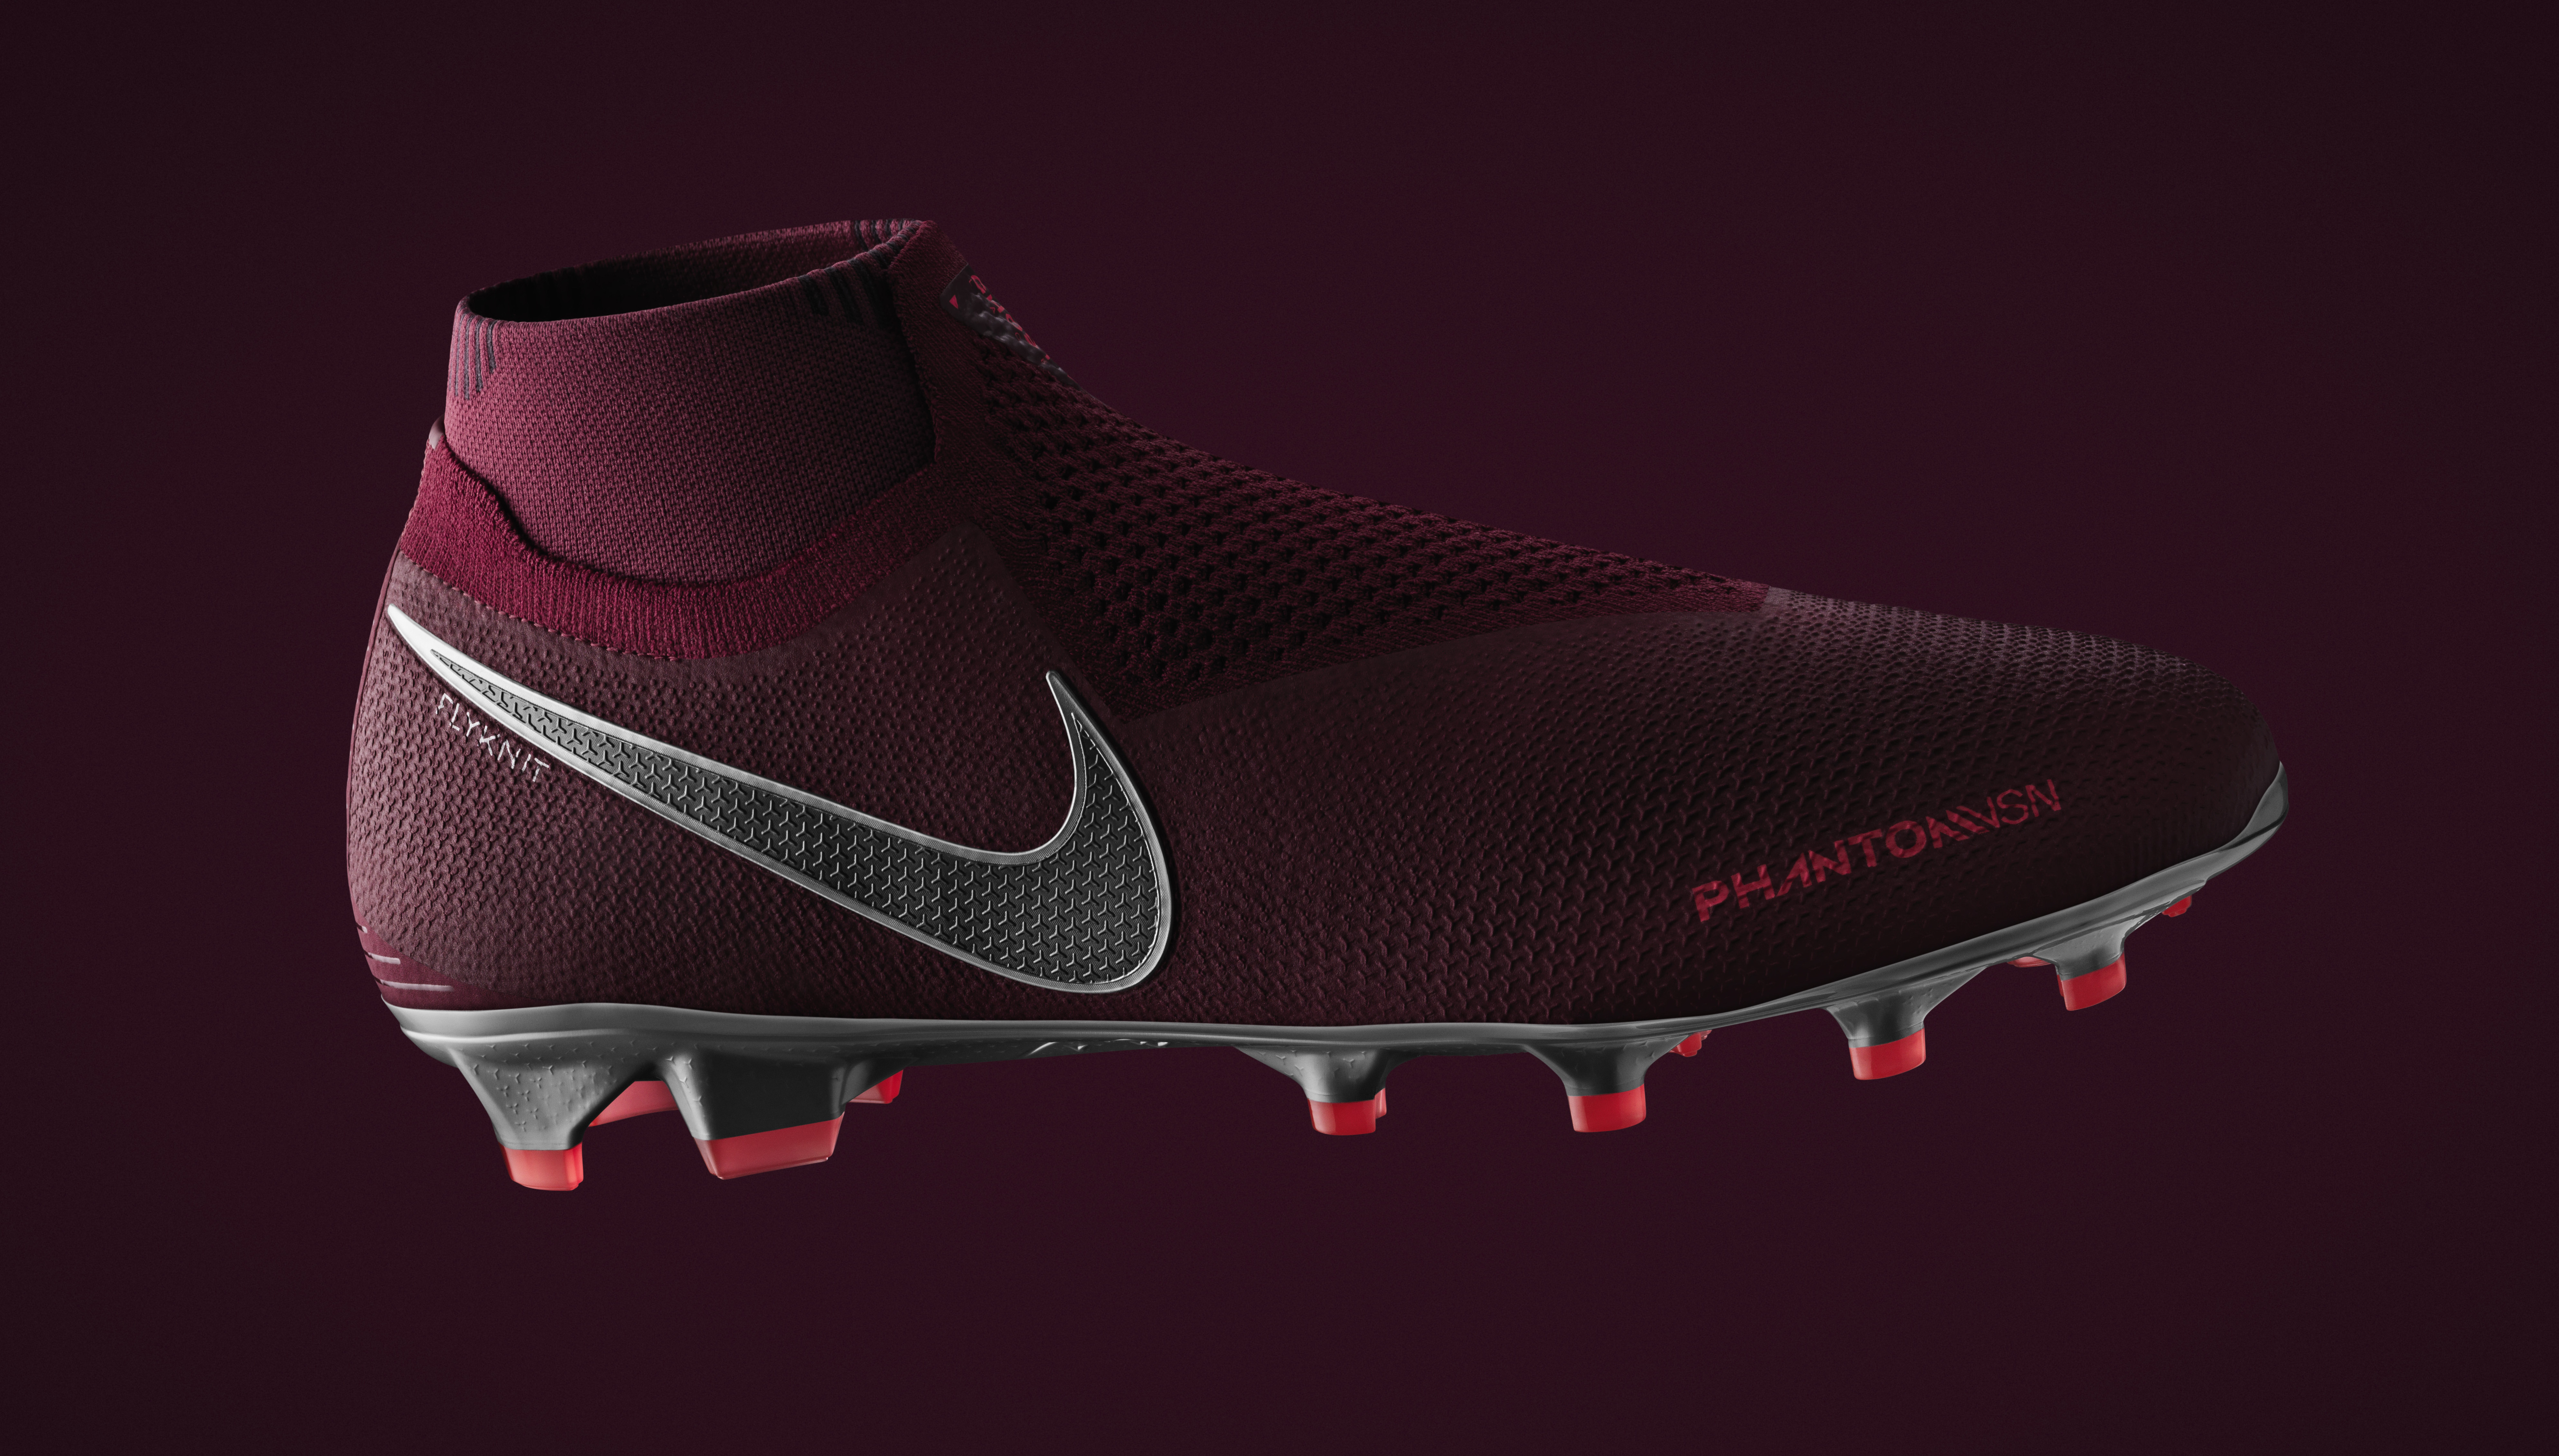 Nike PhantomVSN Soccer Cleat Release 